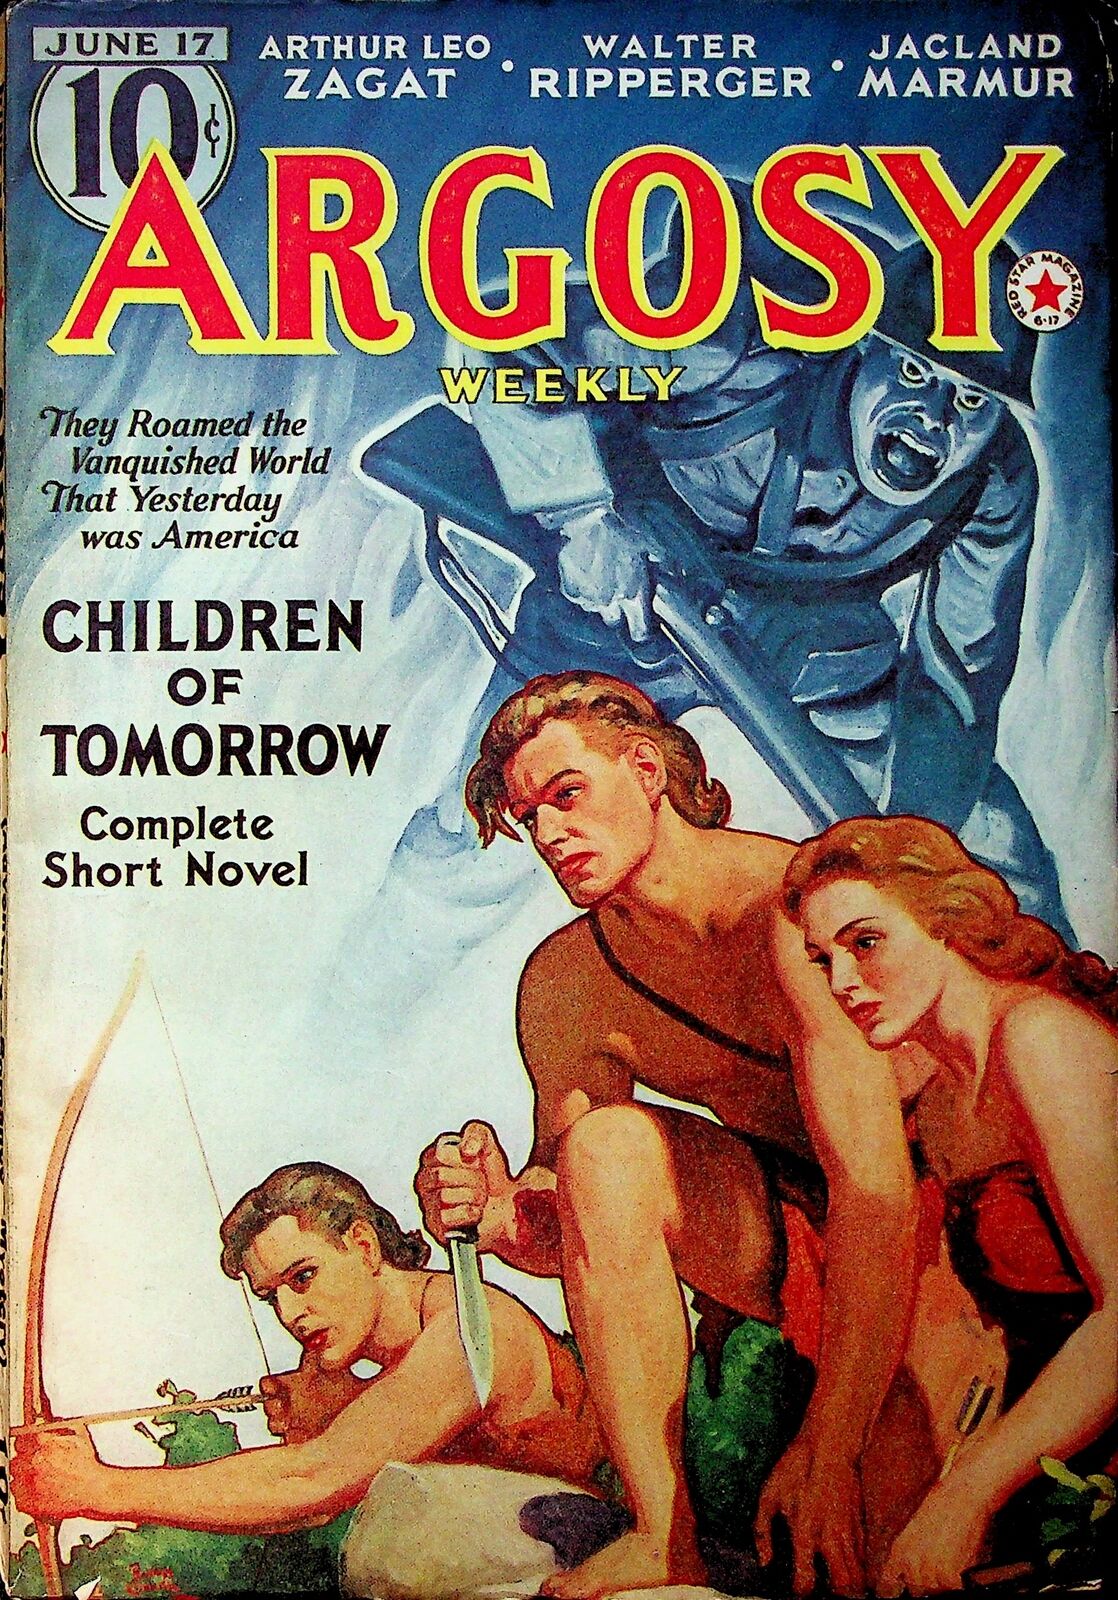 Argosy Part 4: Argosy Weekly Jun 17 1939 Vol. 291 #2 FN